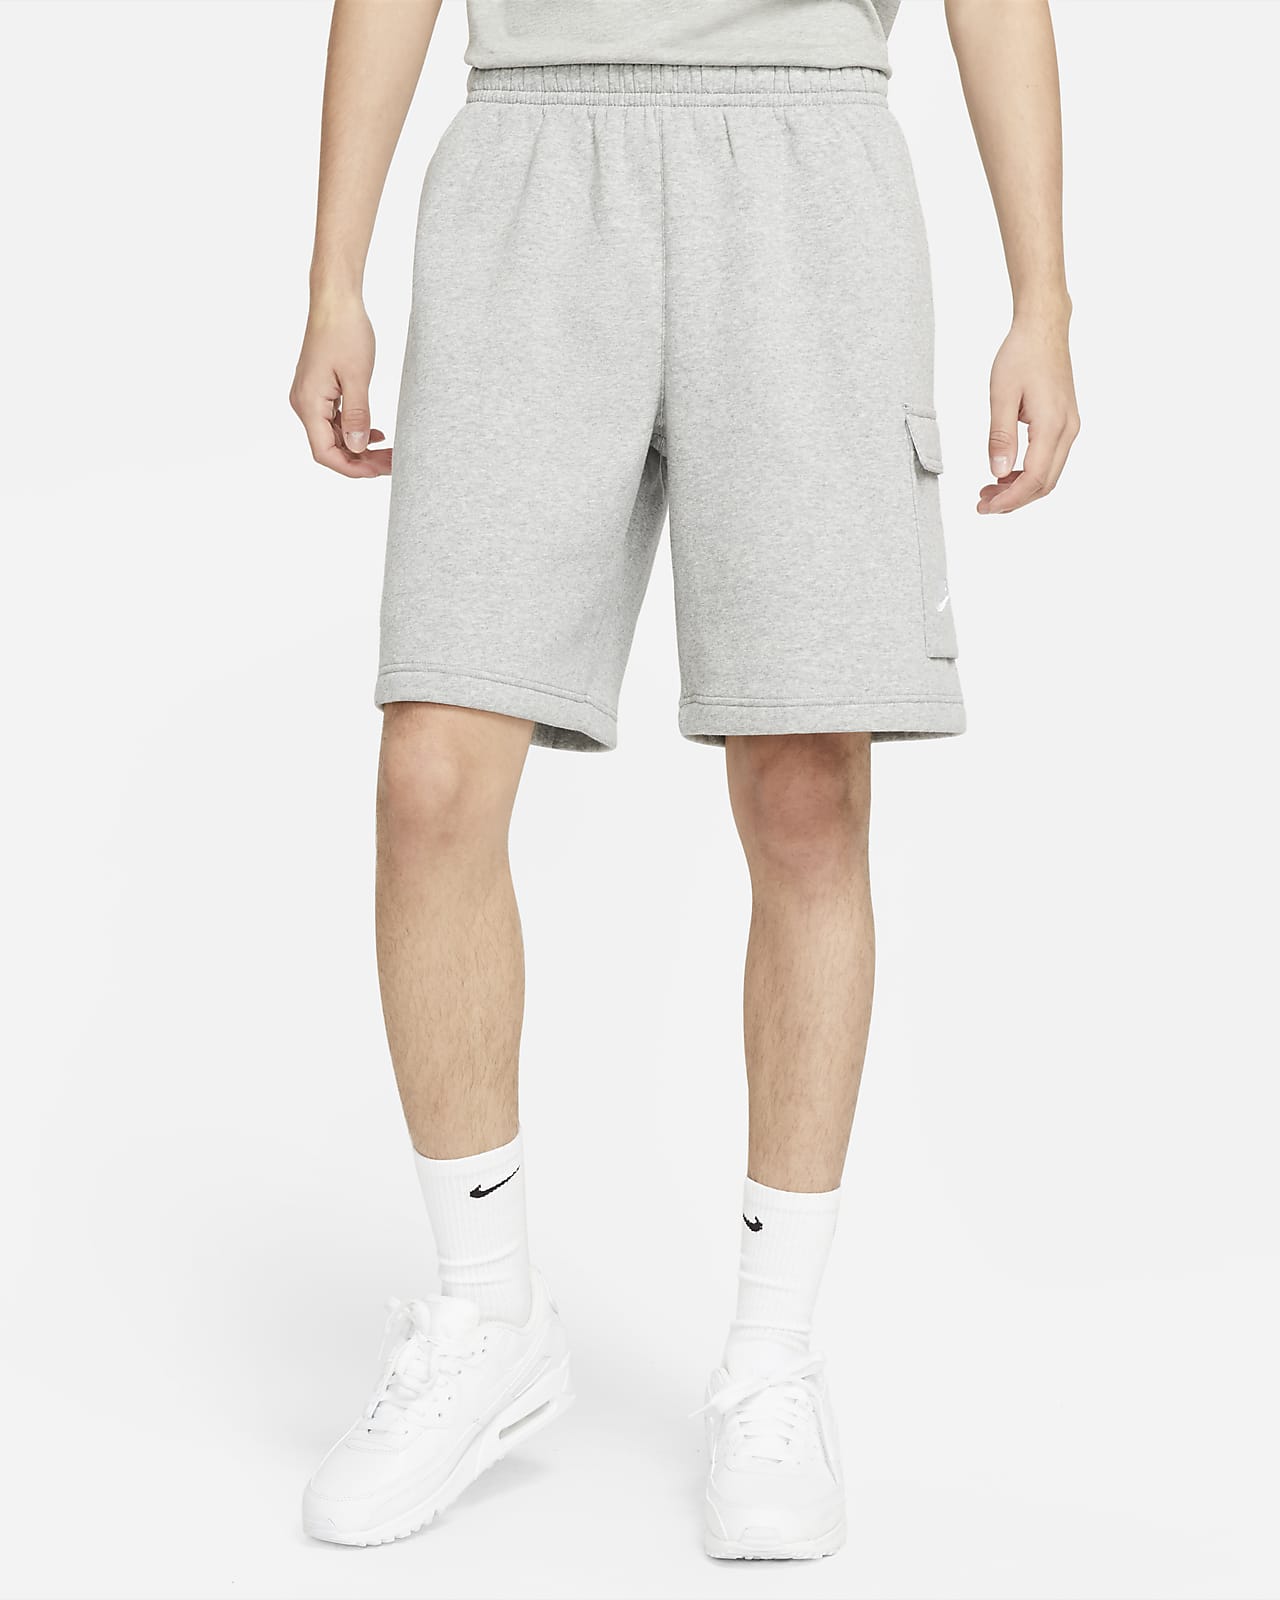 nike sportswear men's club basketball cargo pants